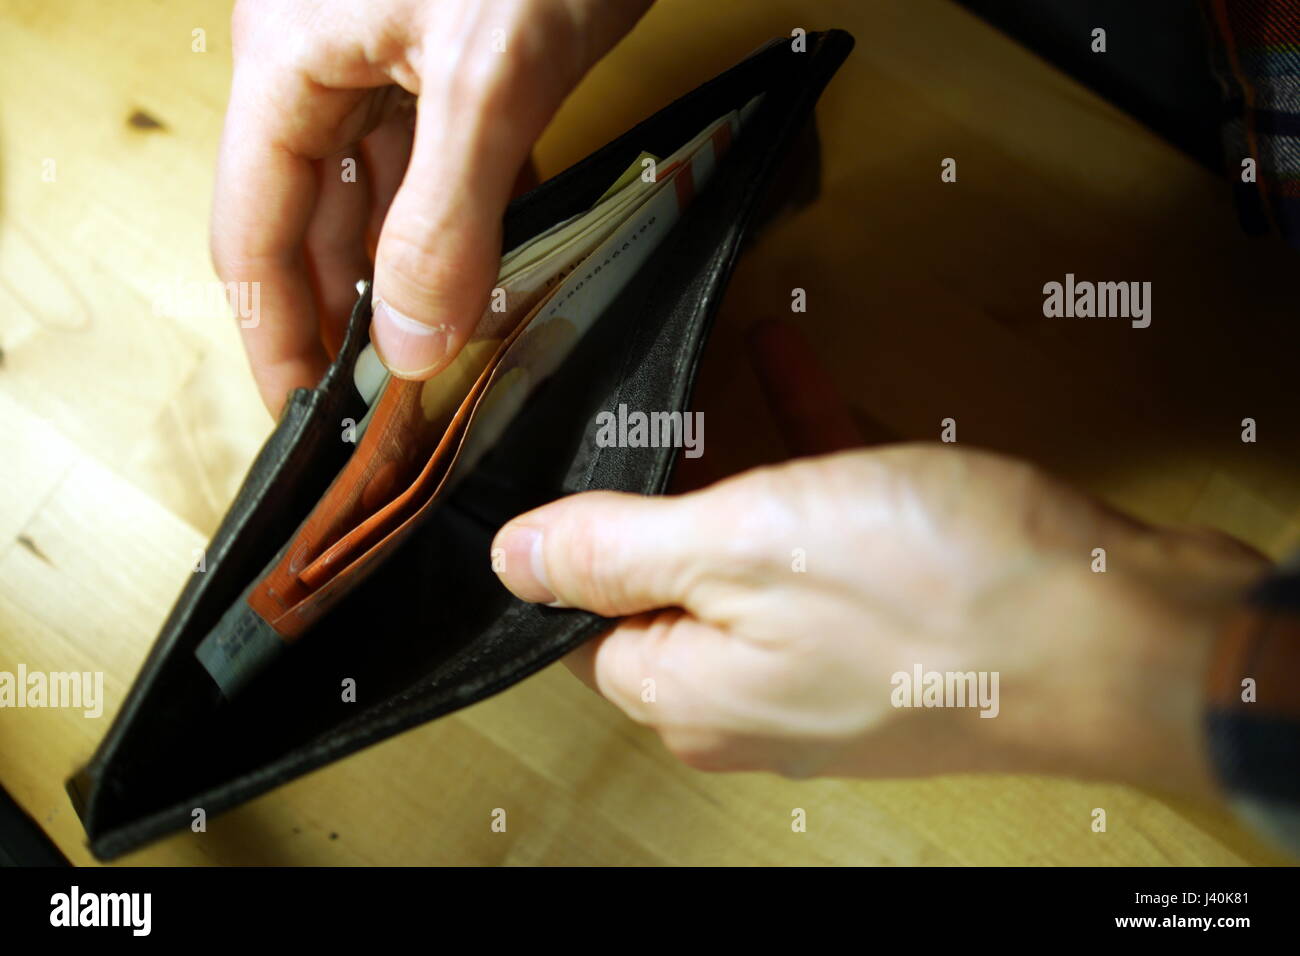 Counting money Stock Photo